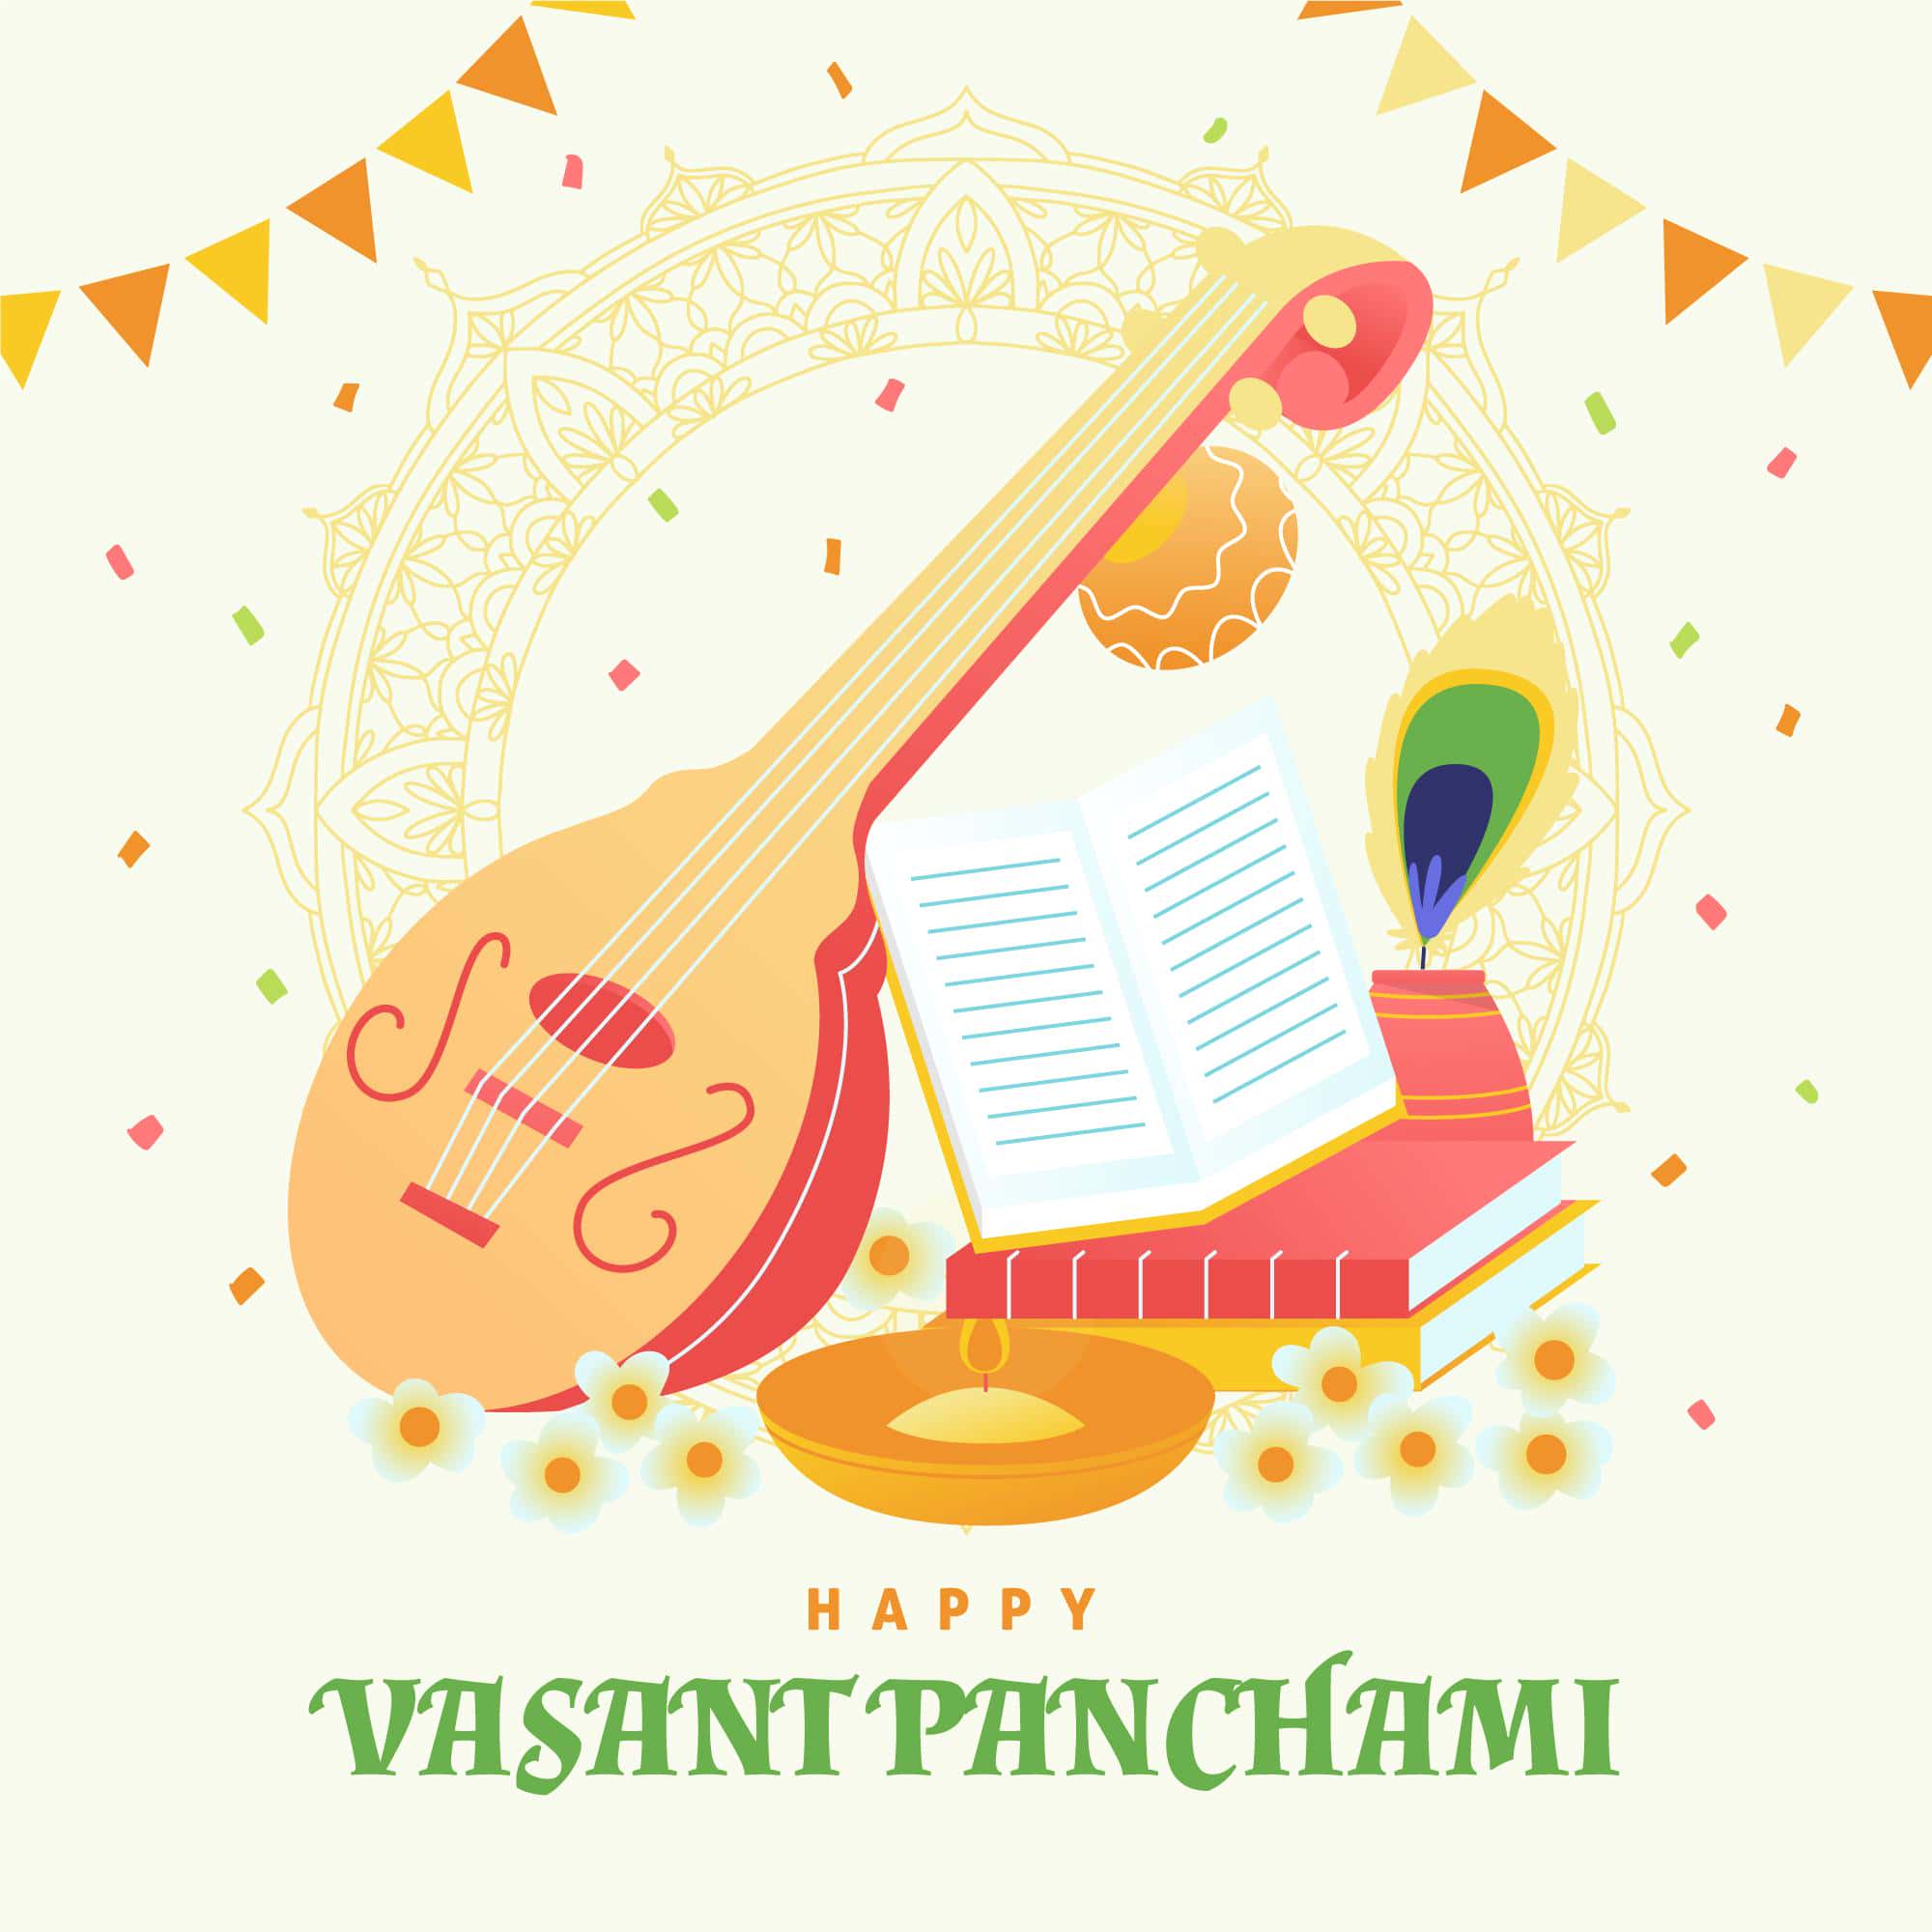 Happy Vasant Panchami 2022 Image